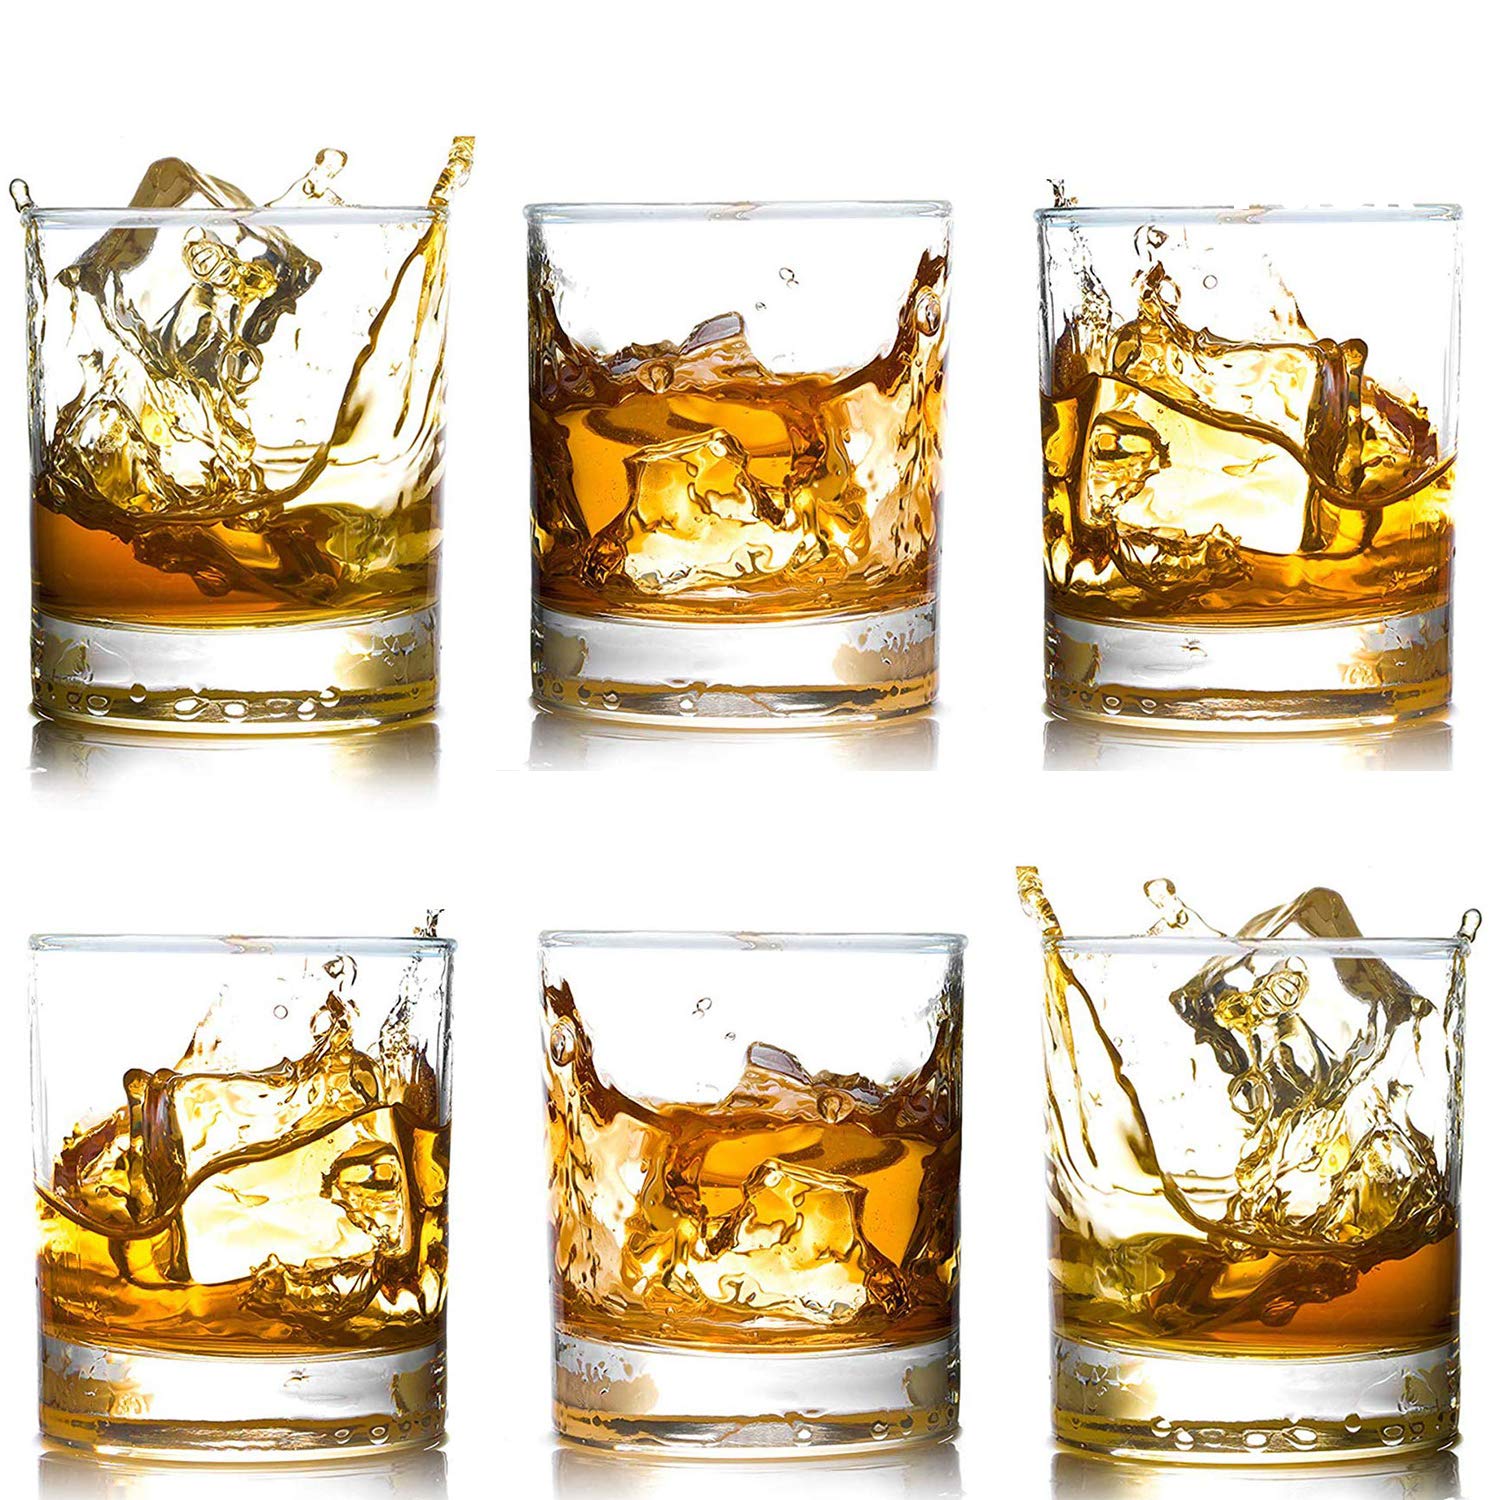 Farielyn-X Whiskey glasses-Premium 12 OZ Scotch glasses Set of 6 Old Fashioned Whiskey glassesgreat gift for Scotch LoversStyle glassware f